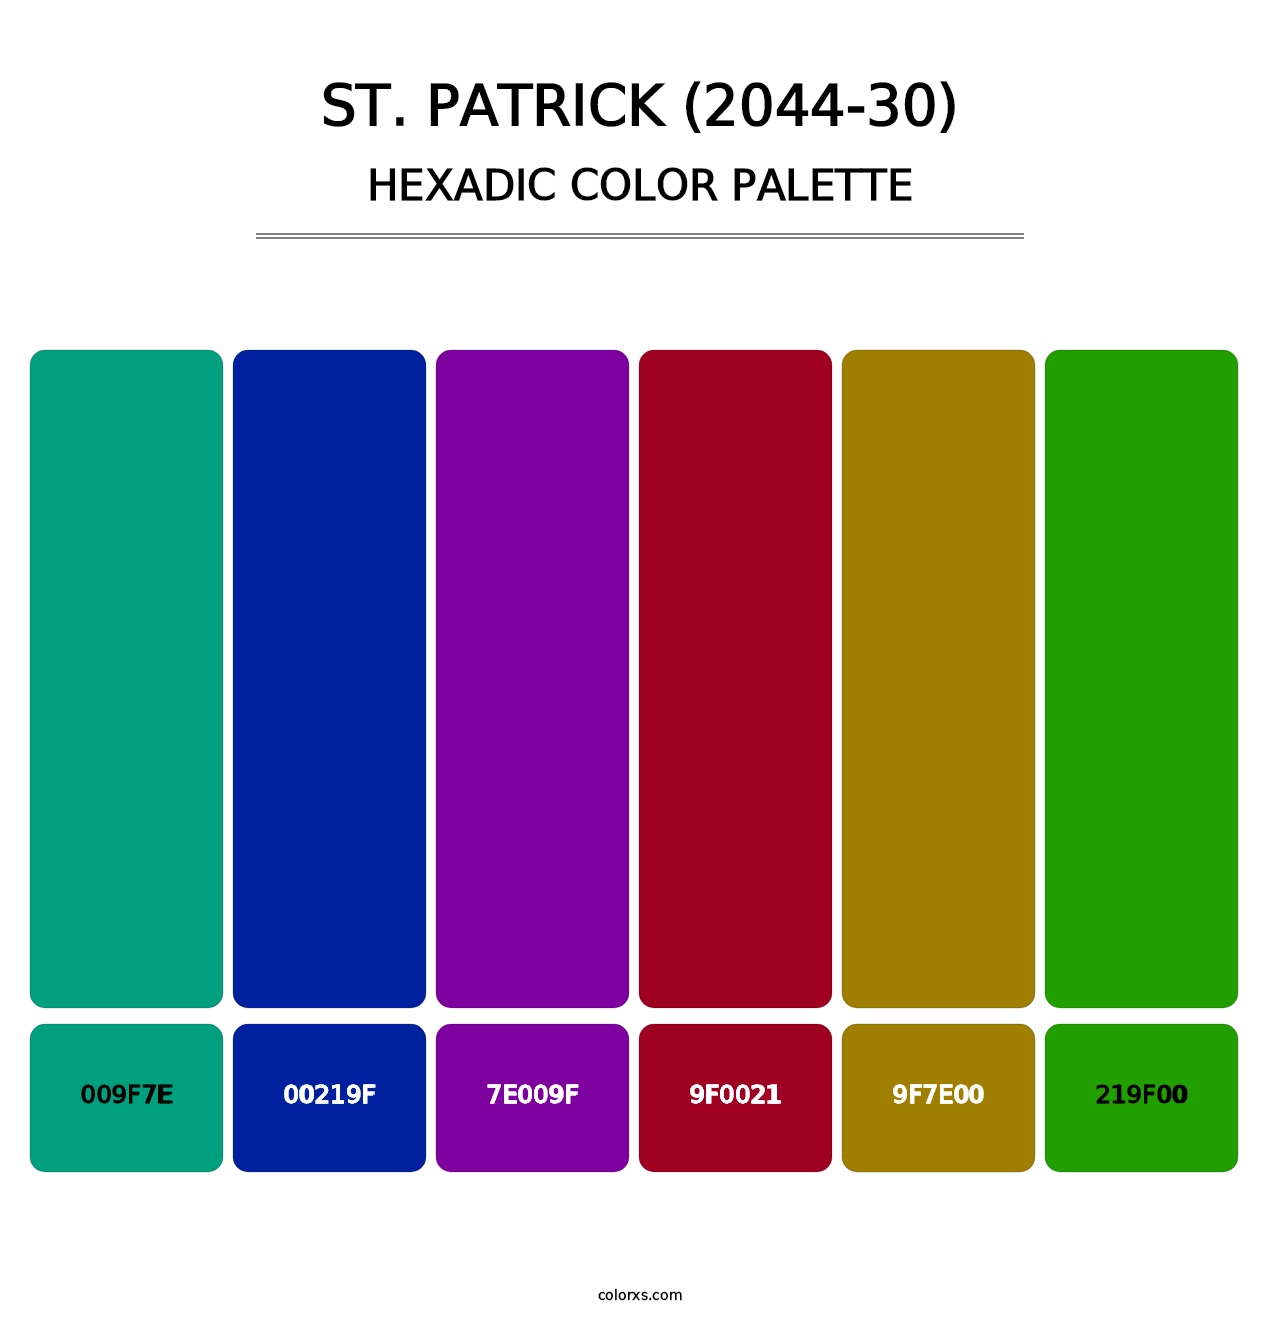 St. Patrick (2044-30) - Hexadic Color Palette